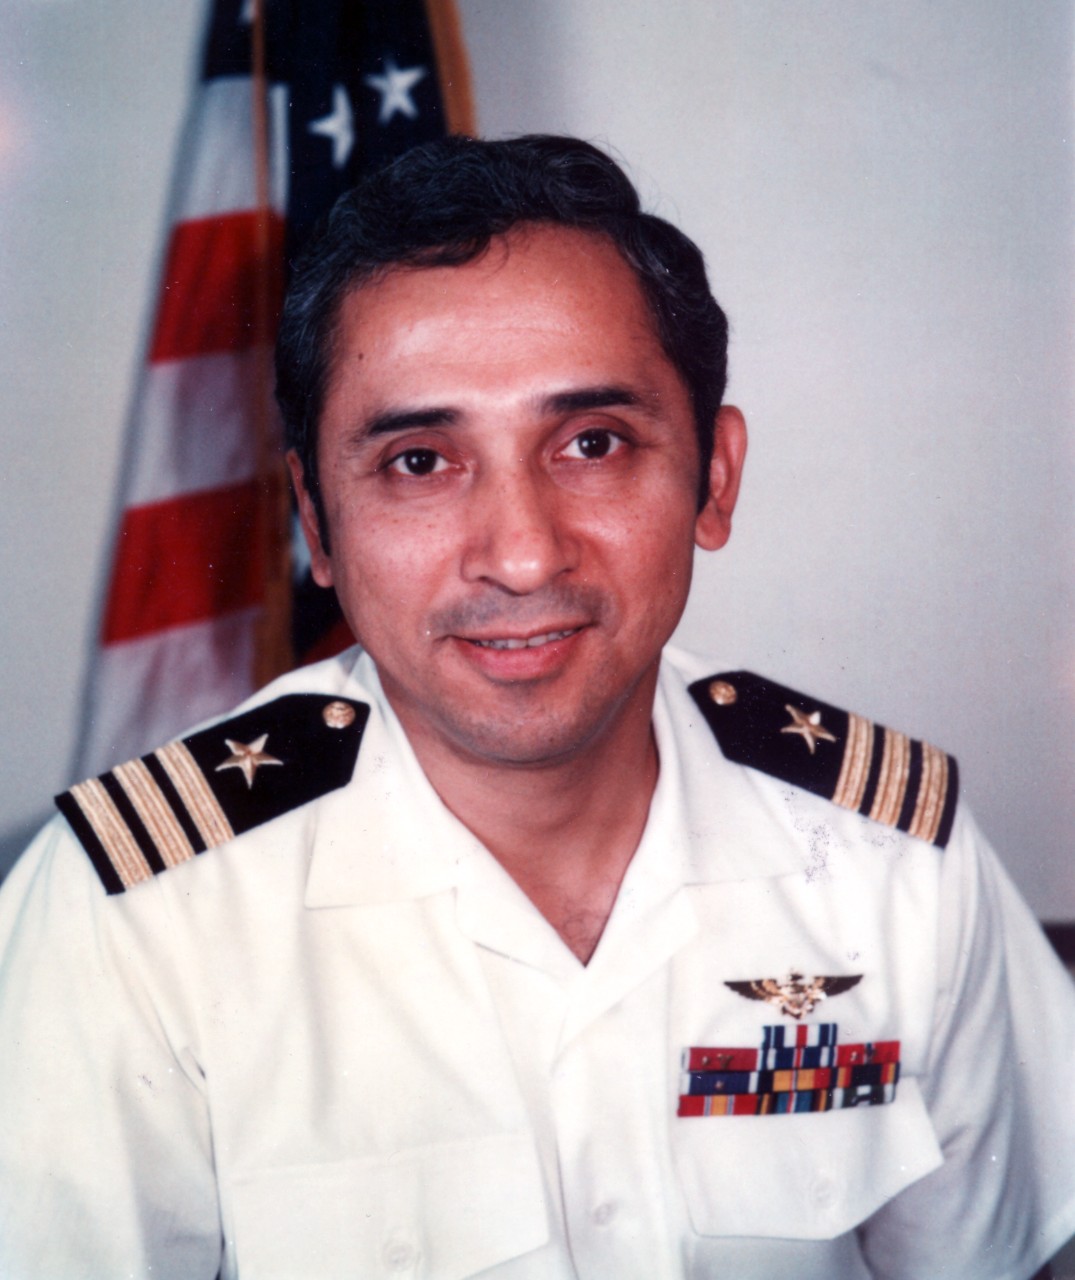 Official portrait of Commander Everett Alvarez Jr., circa 1980.